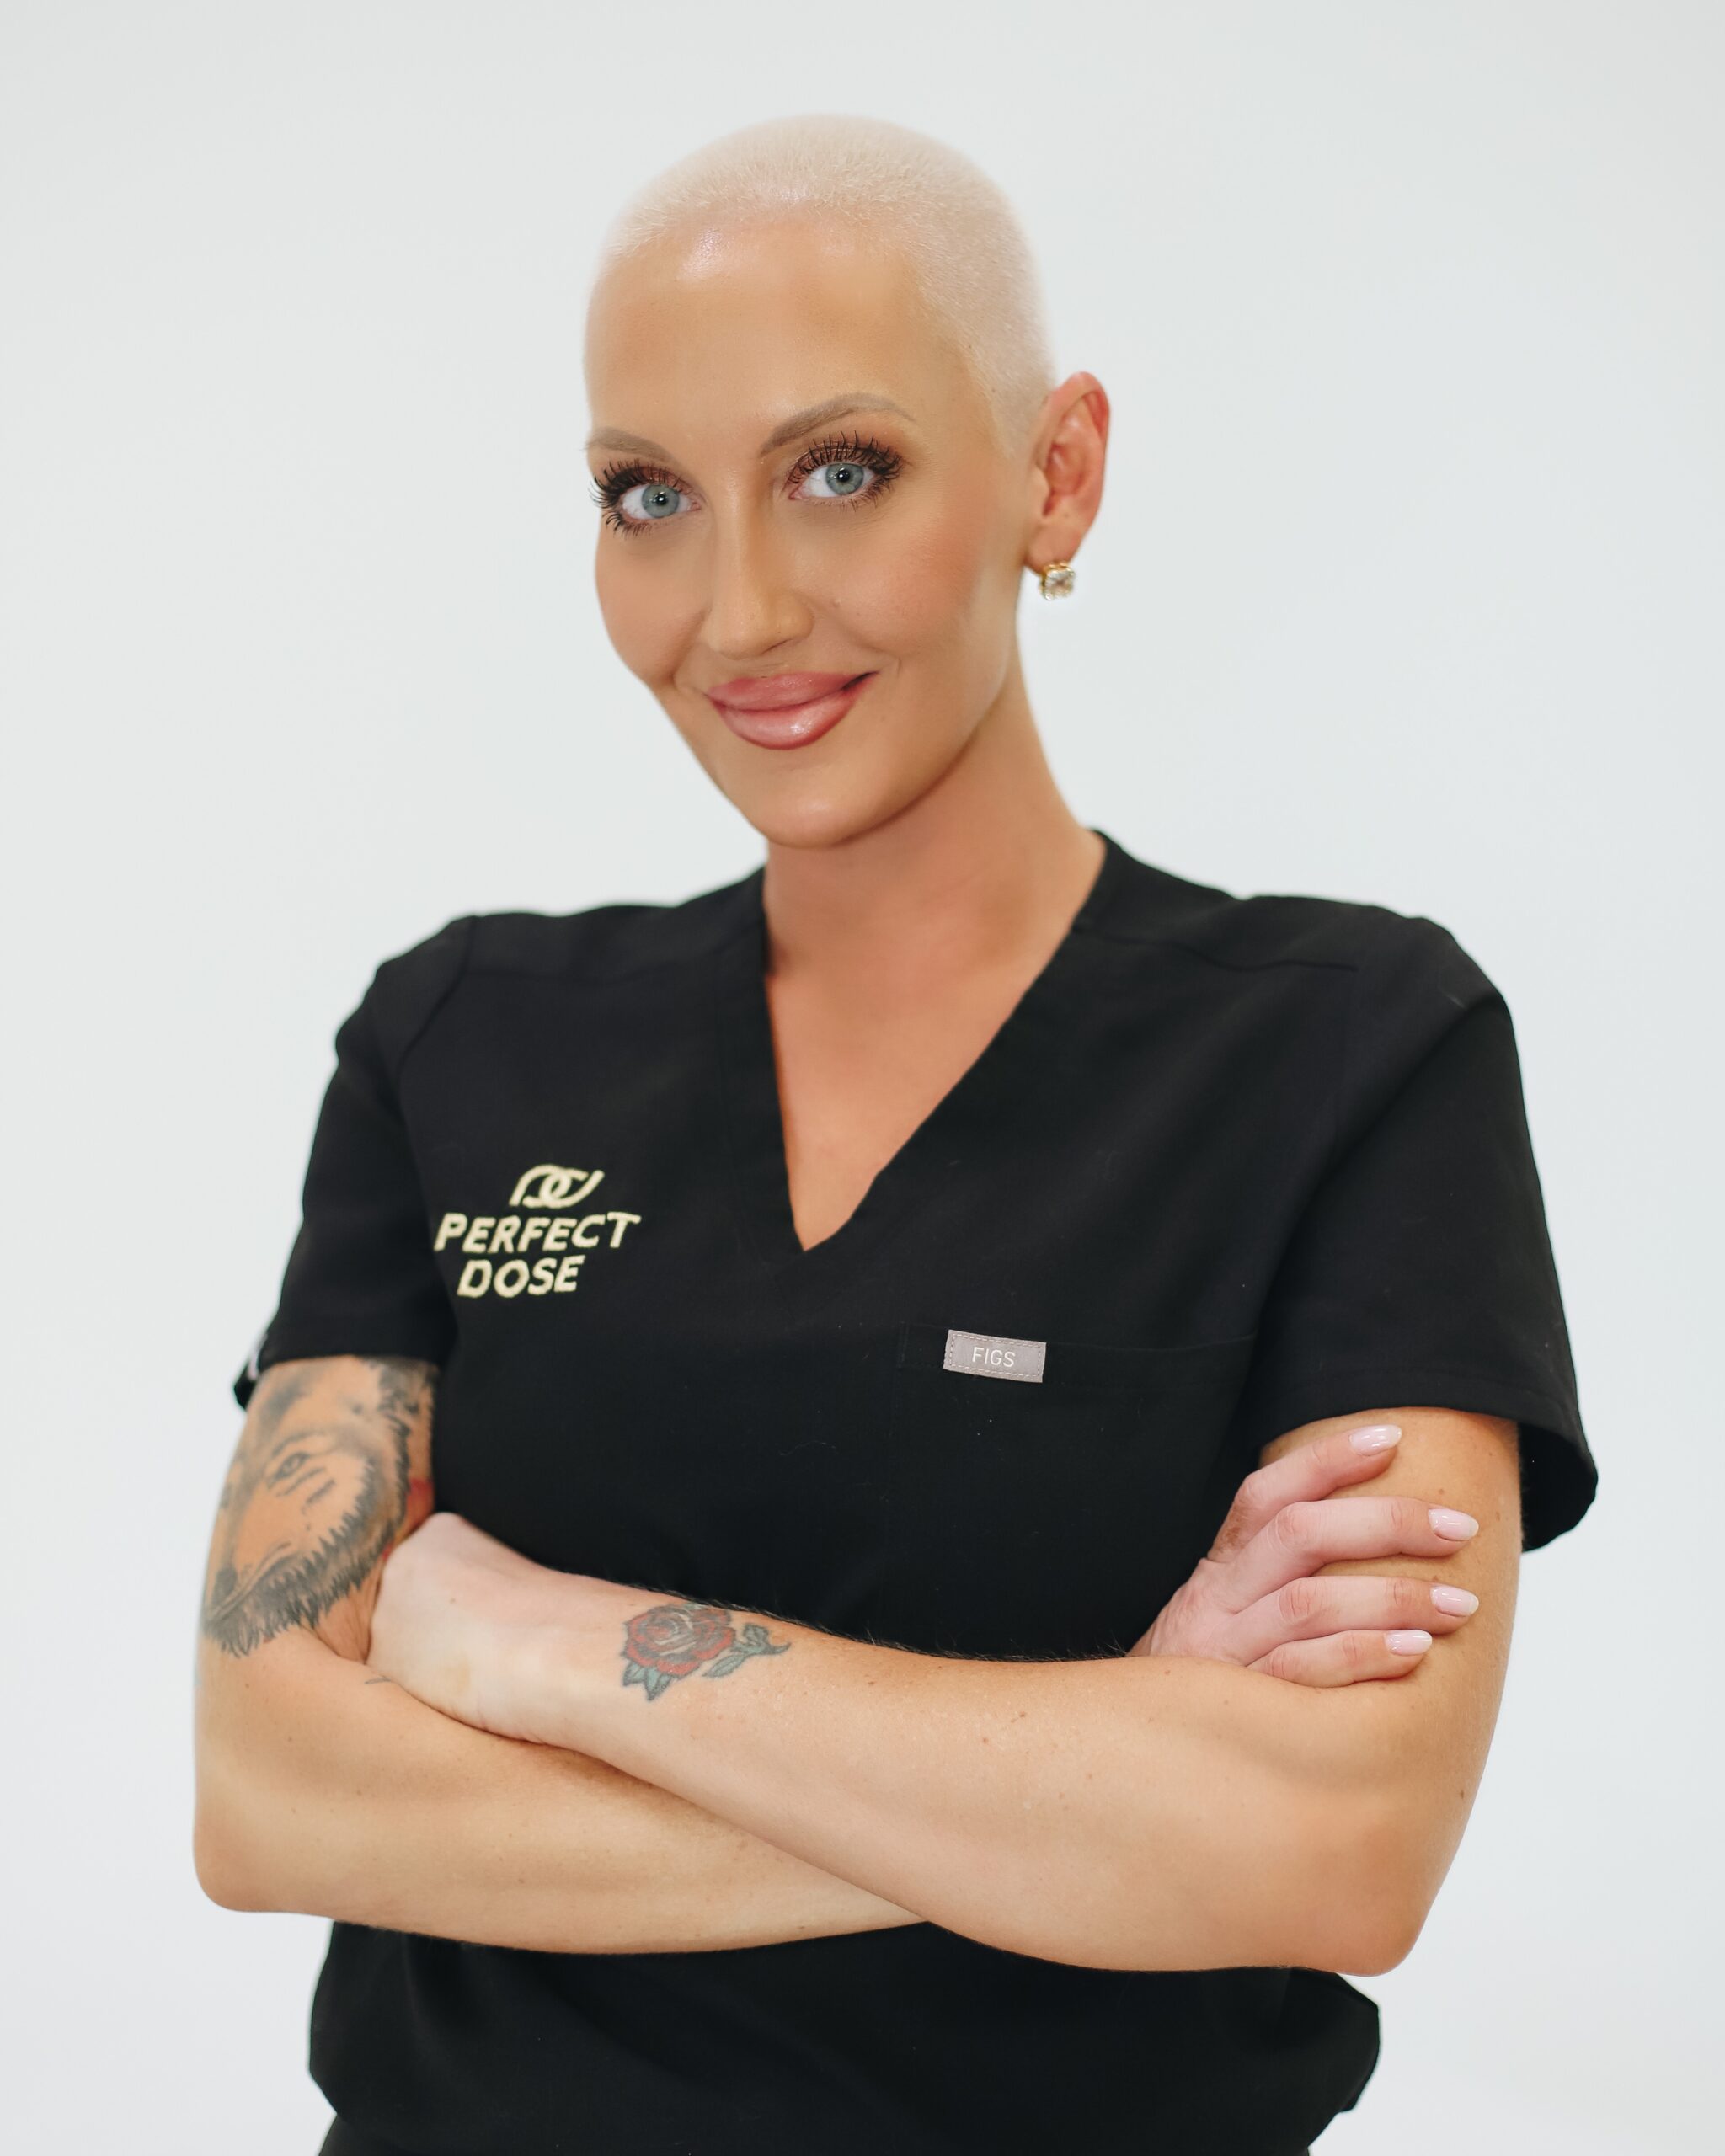 Emily Osborne-Johnson Medical Spa Scottsdale The Perfect Dose